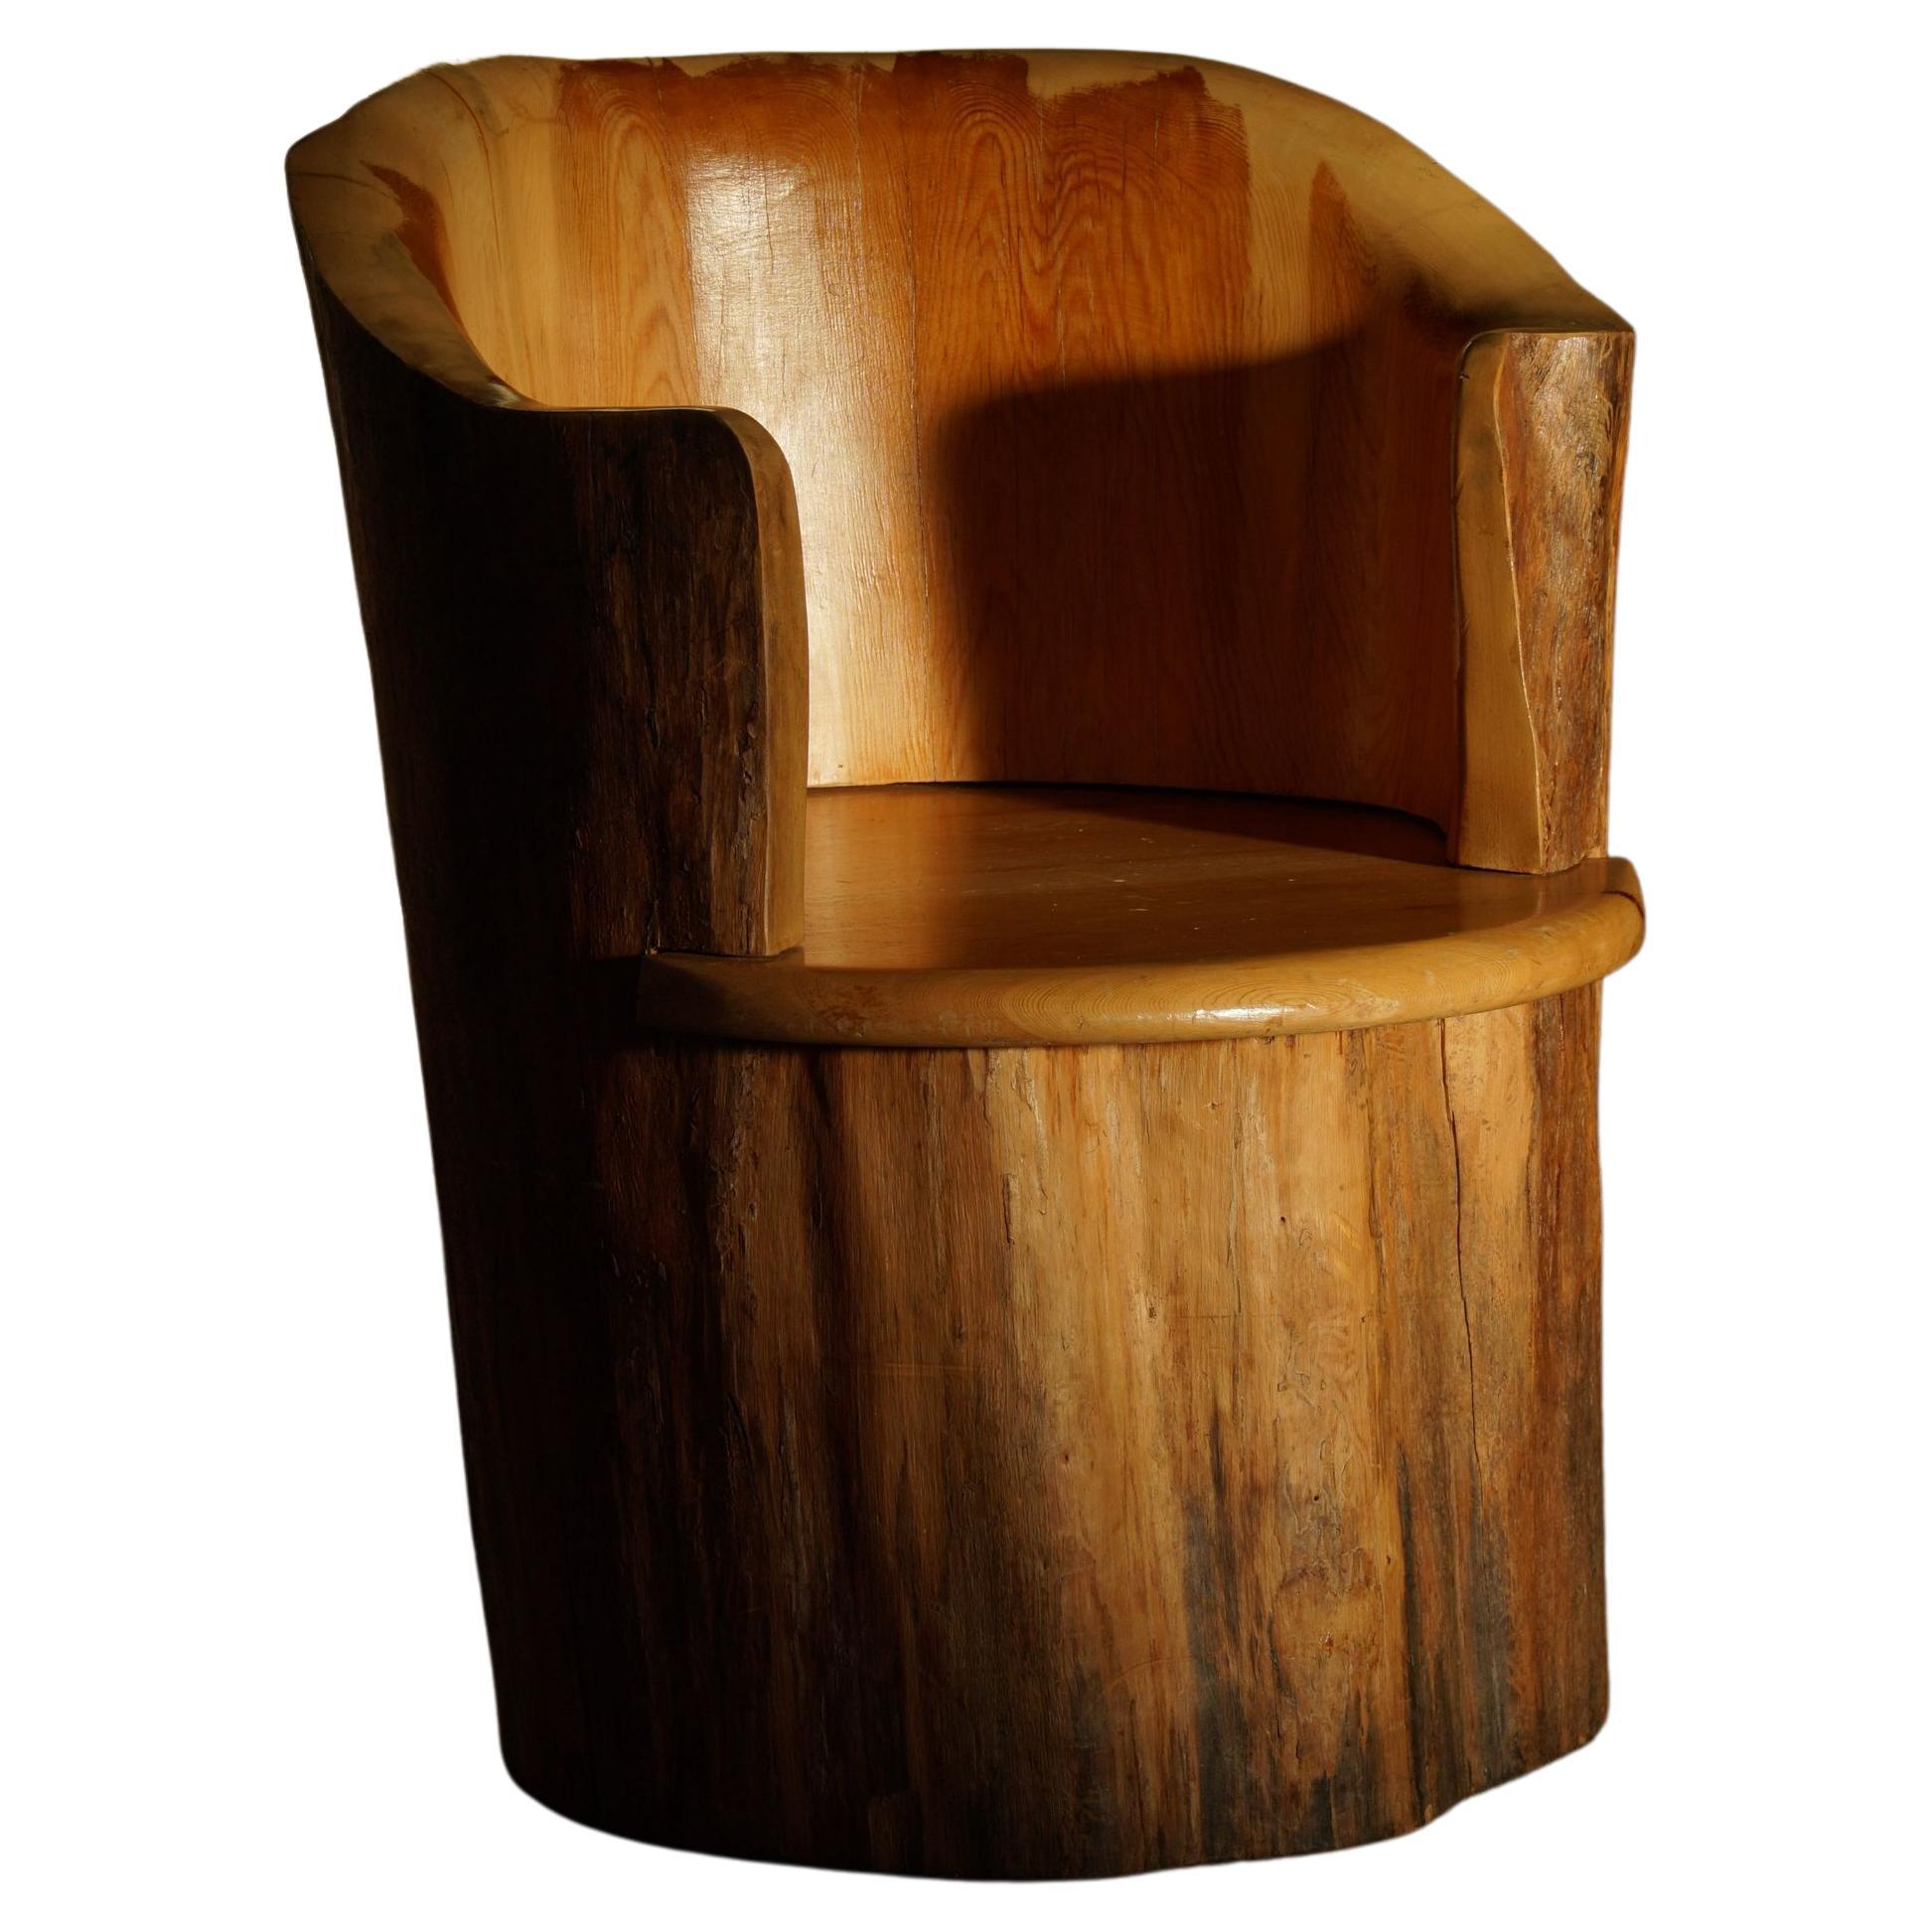 Sculptural Carved Wabi Sabi Brutalist Stump Chair in Solid Pine, Swedish, 1968